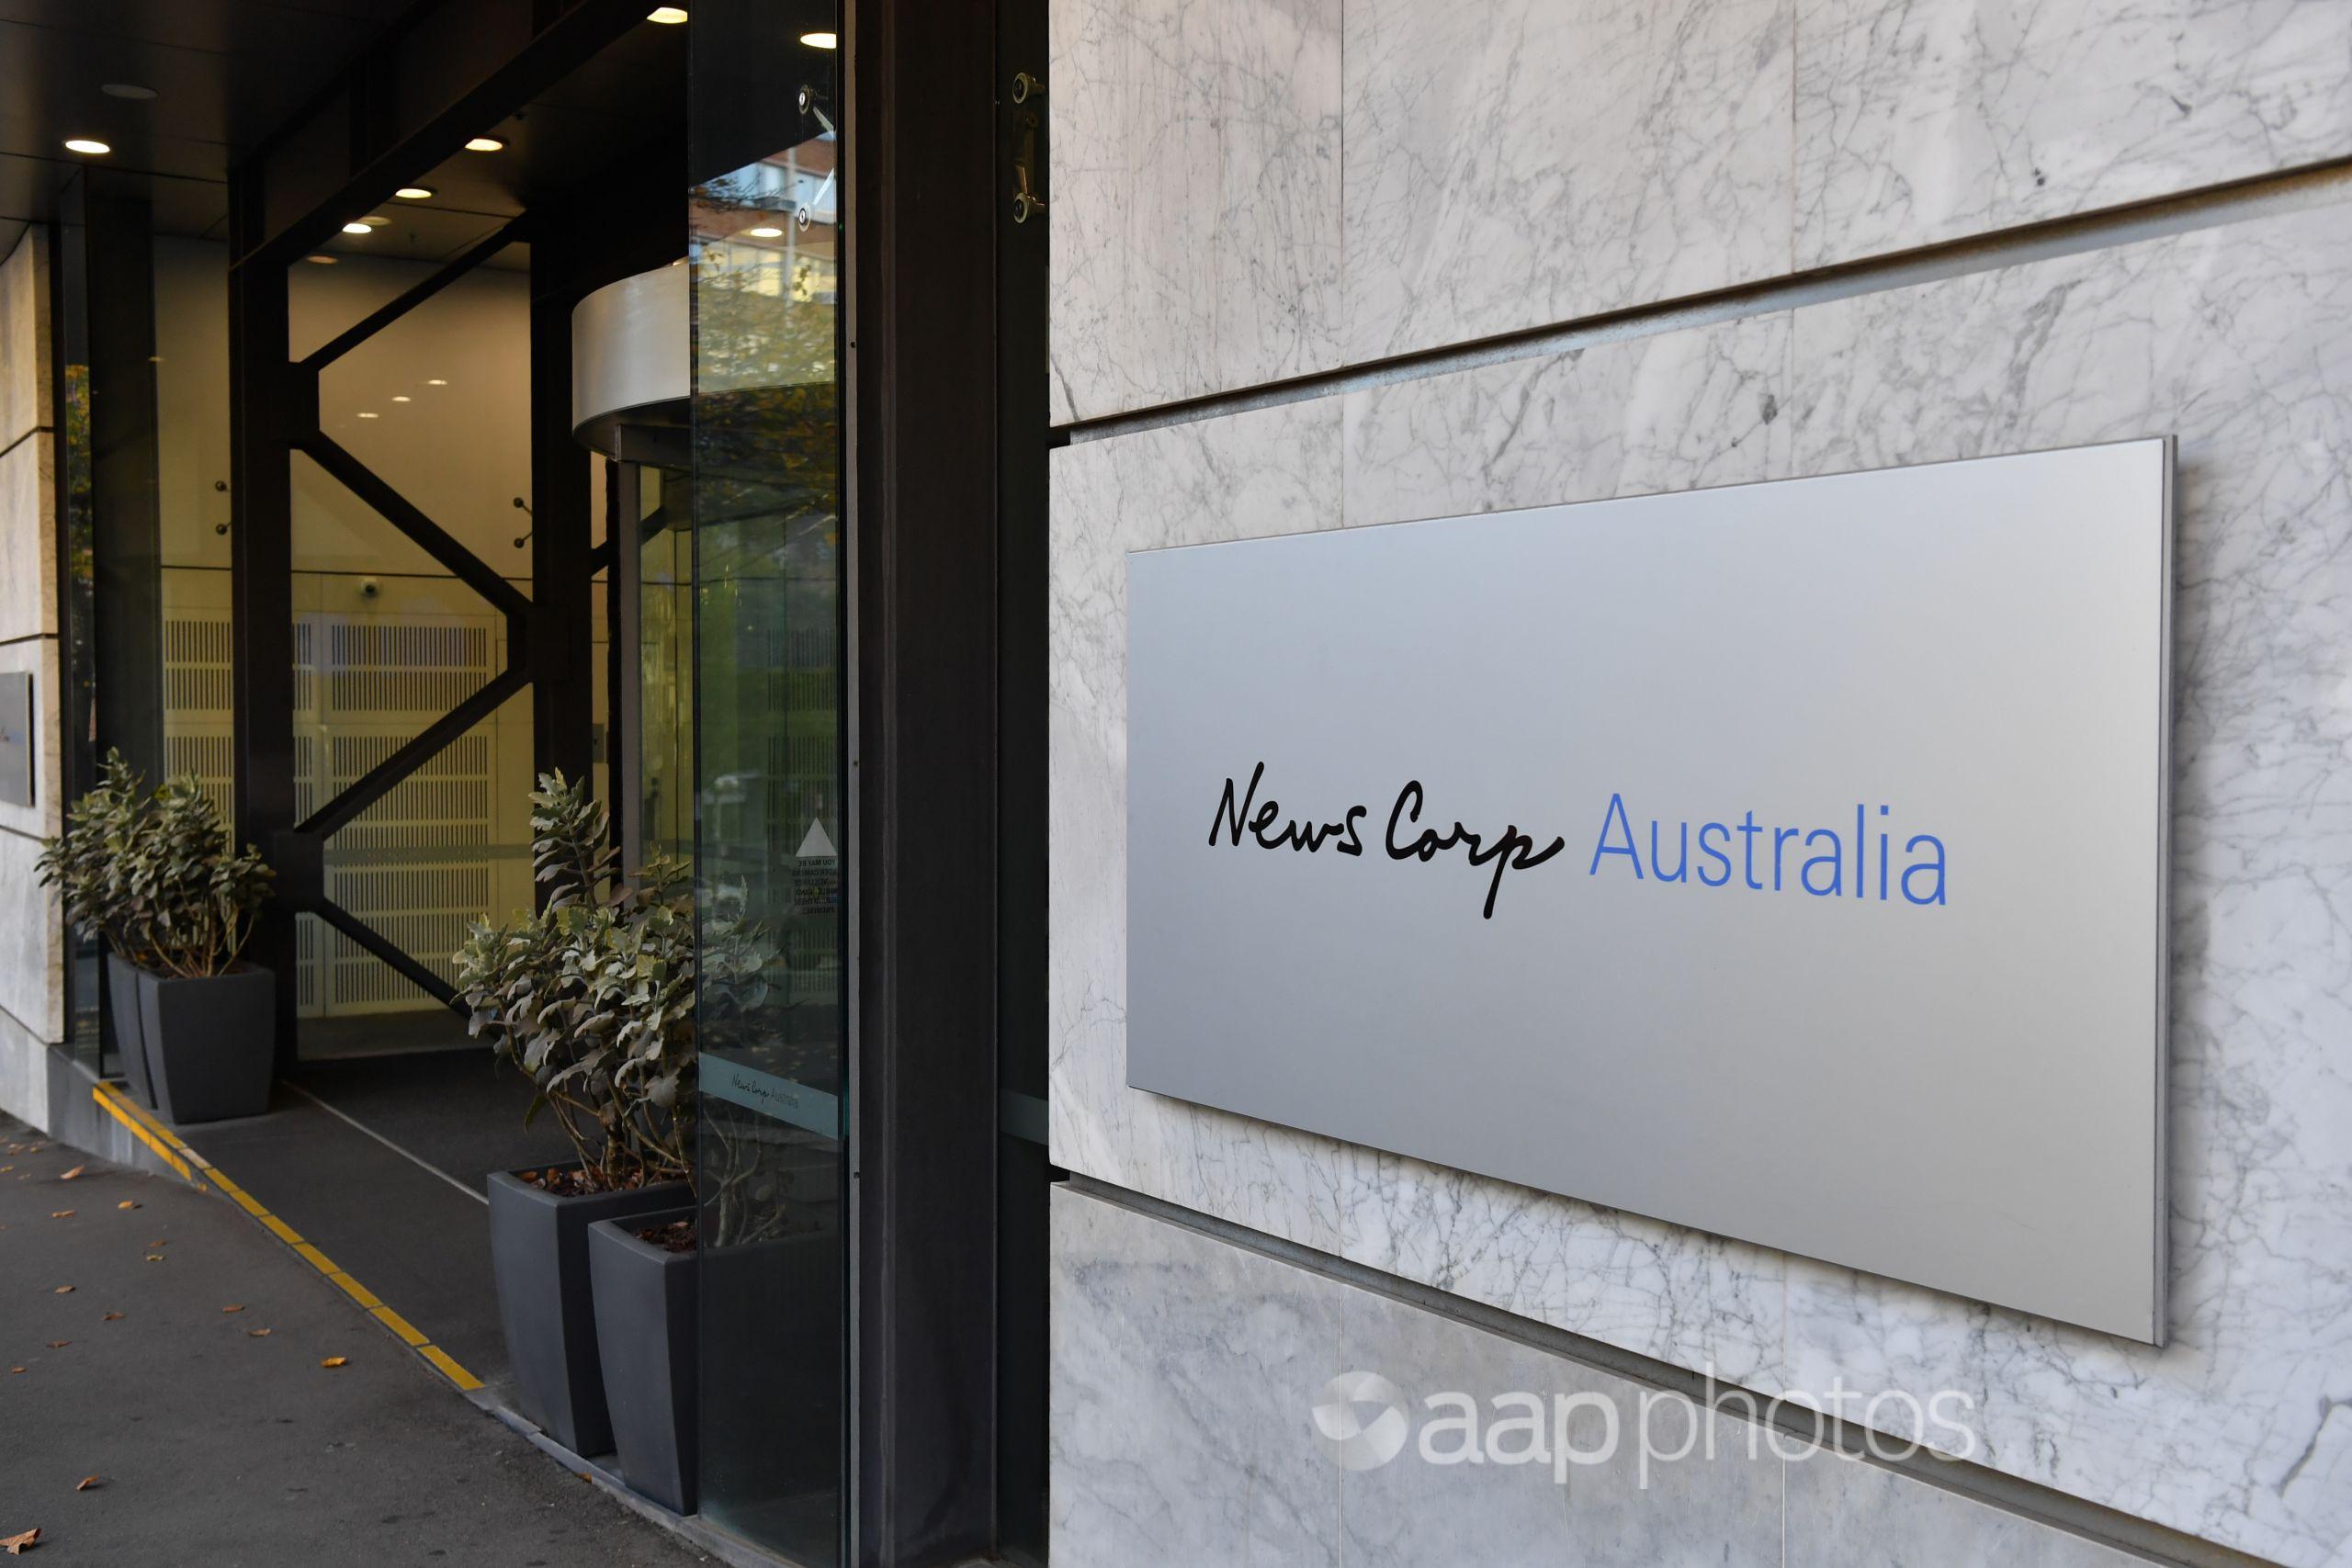 News Corp Australia's Holt Street headquarters in Sydney.